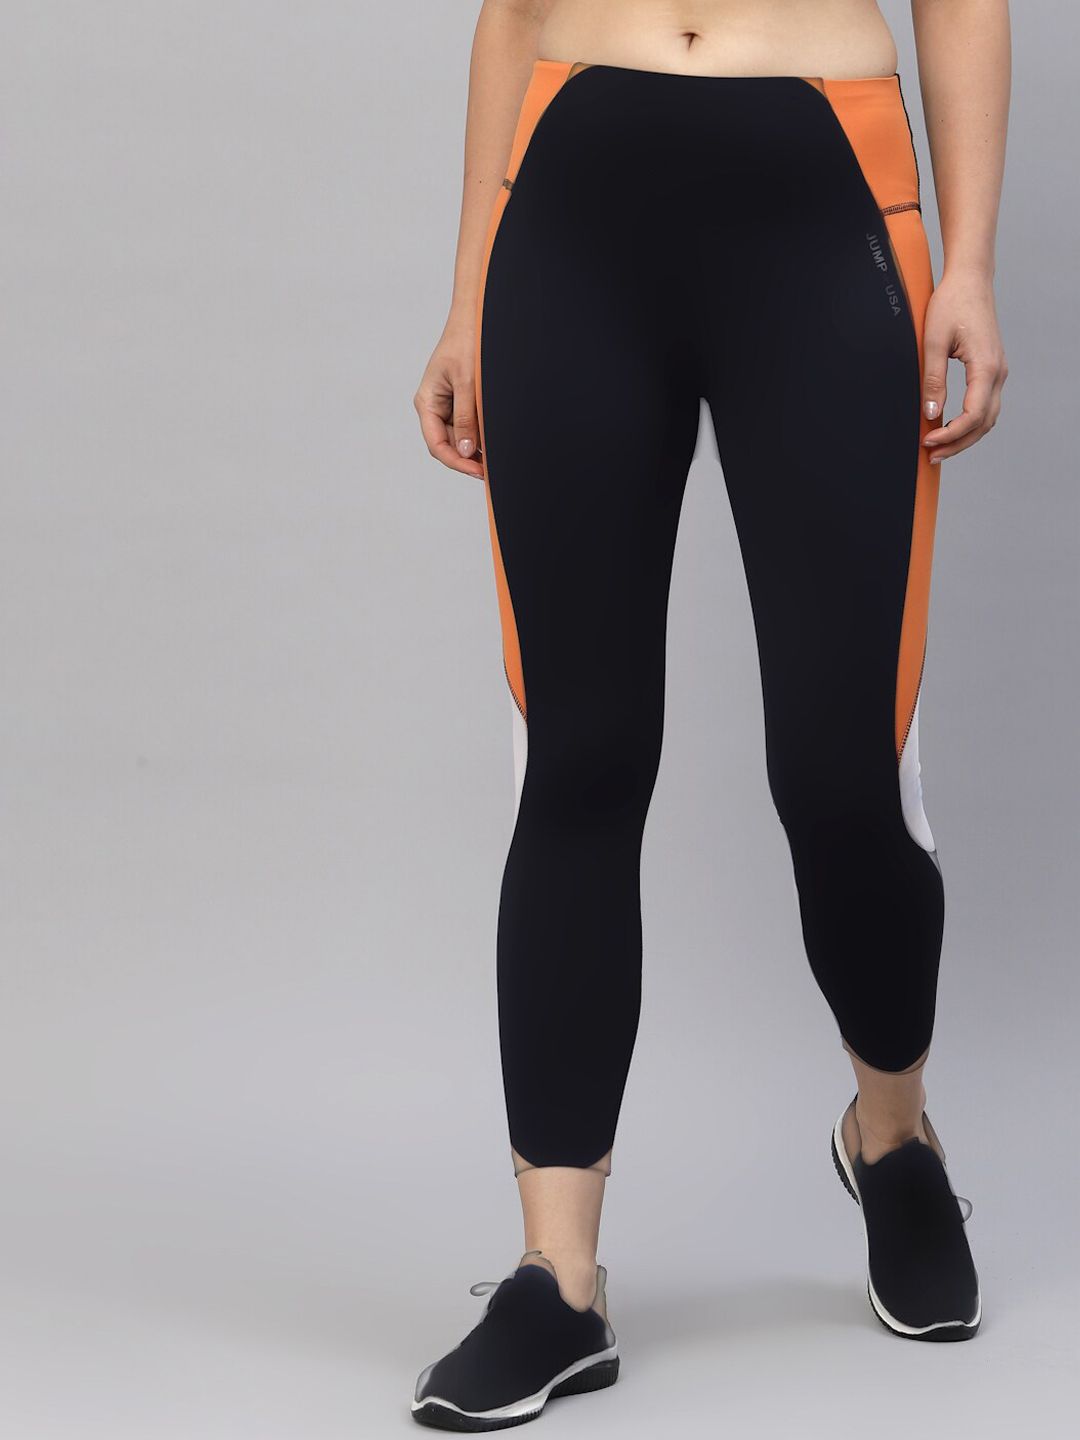 JUMP USA Women Black & Orange Colorblocked Rapid-Dry Training & Gym Tights Price in India